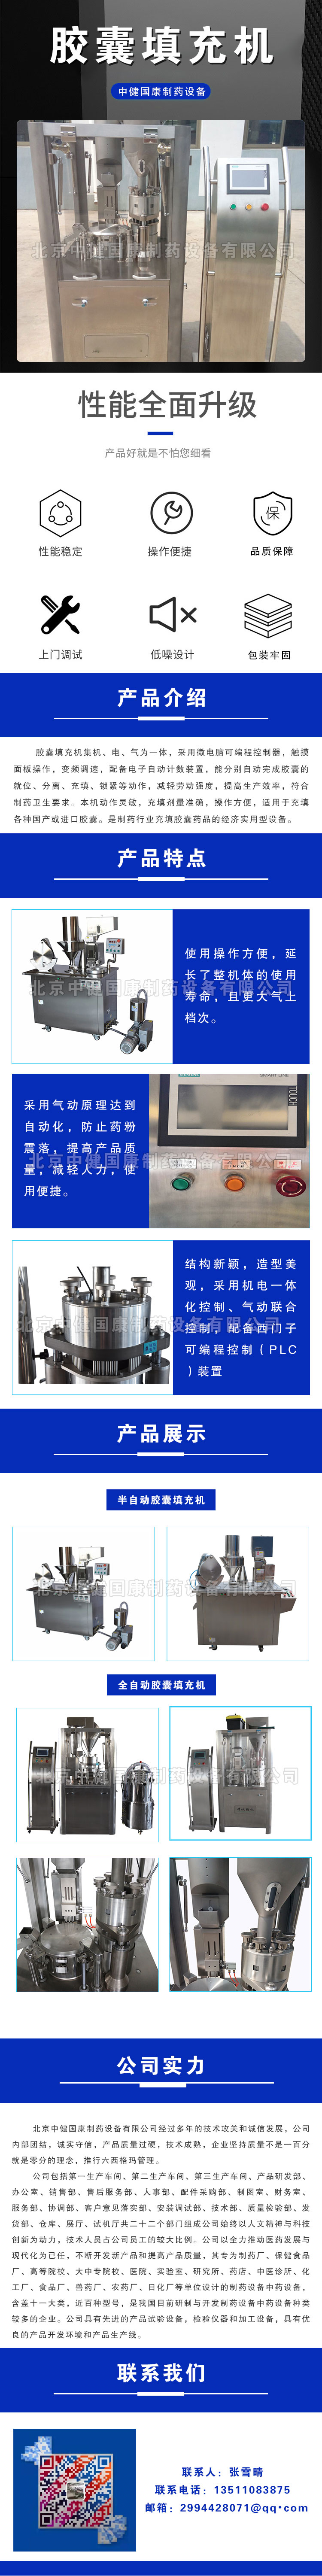 Small capsule filling machine Zhongjian Guokang semi-automatic powder filling equipment